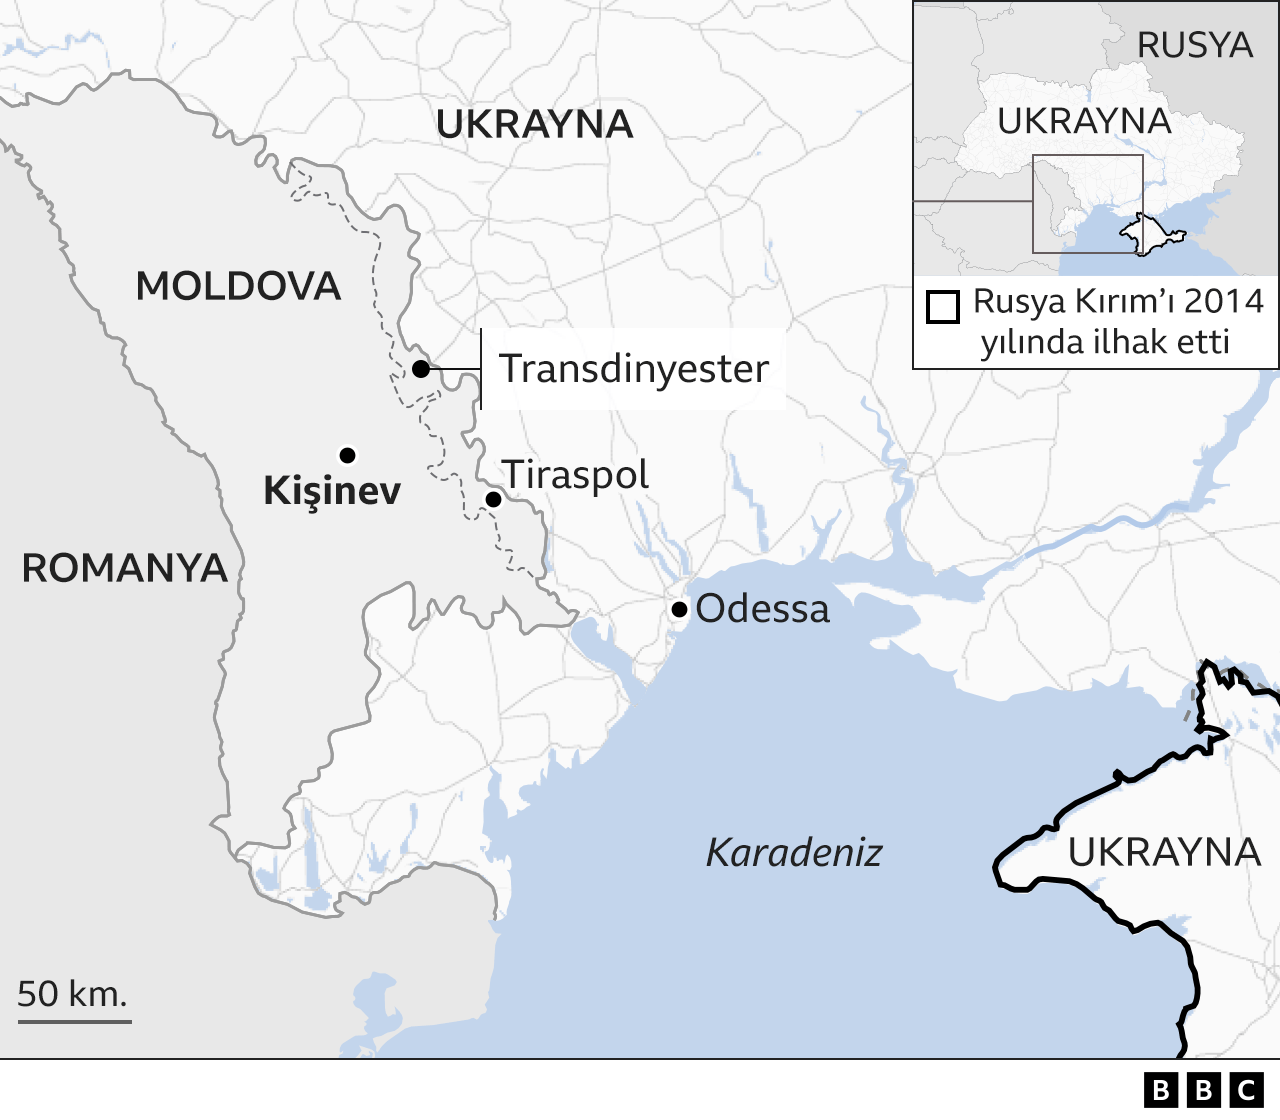 Transdinyester'in yerini gösteren harita